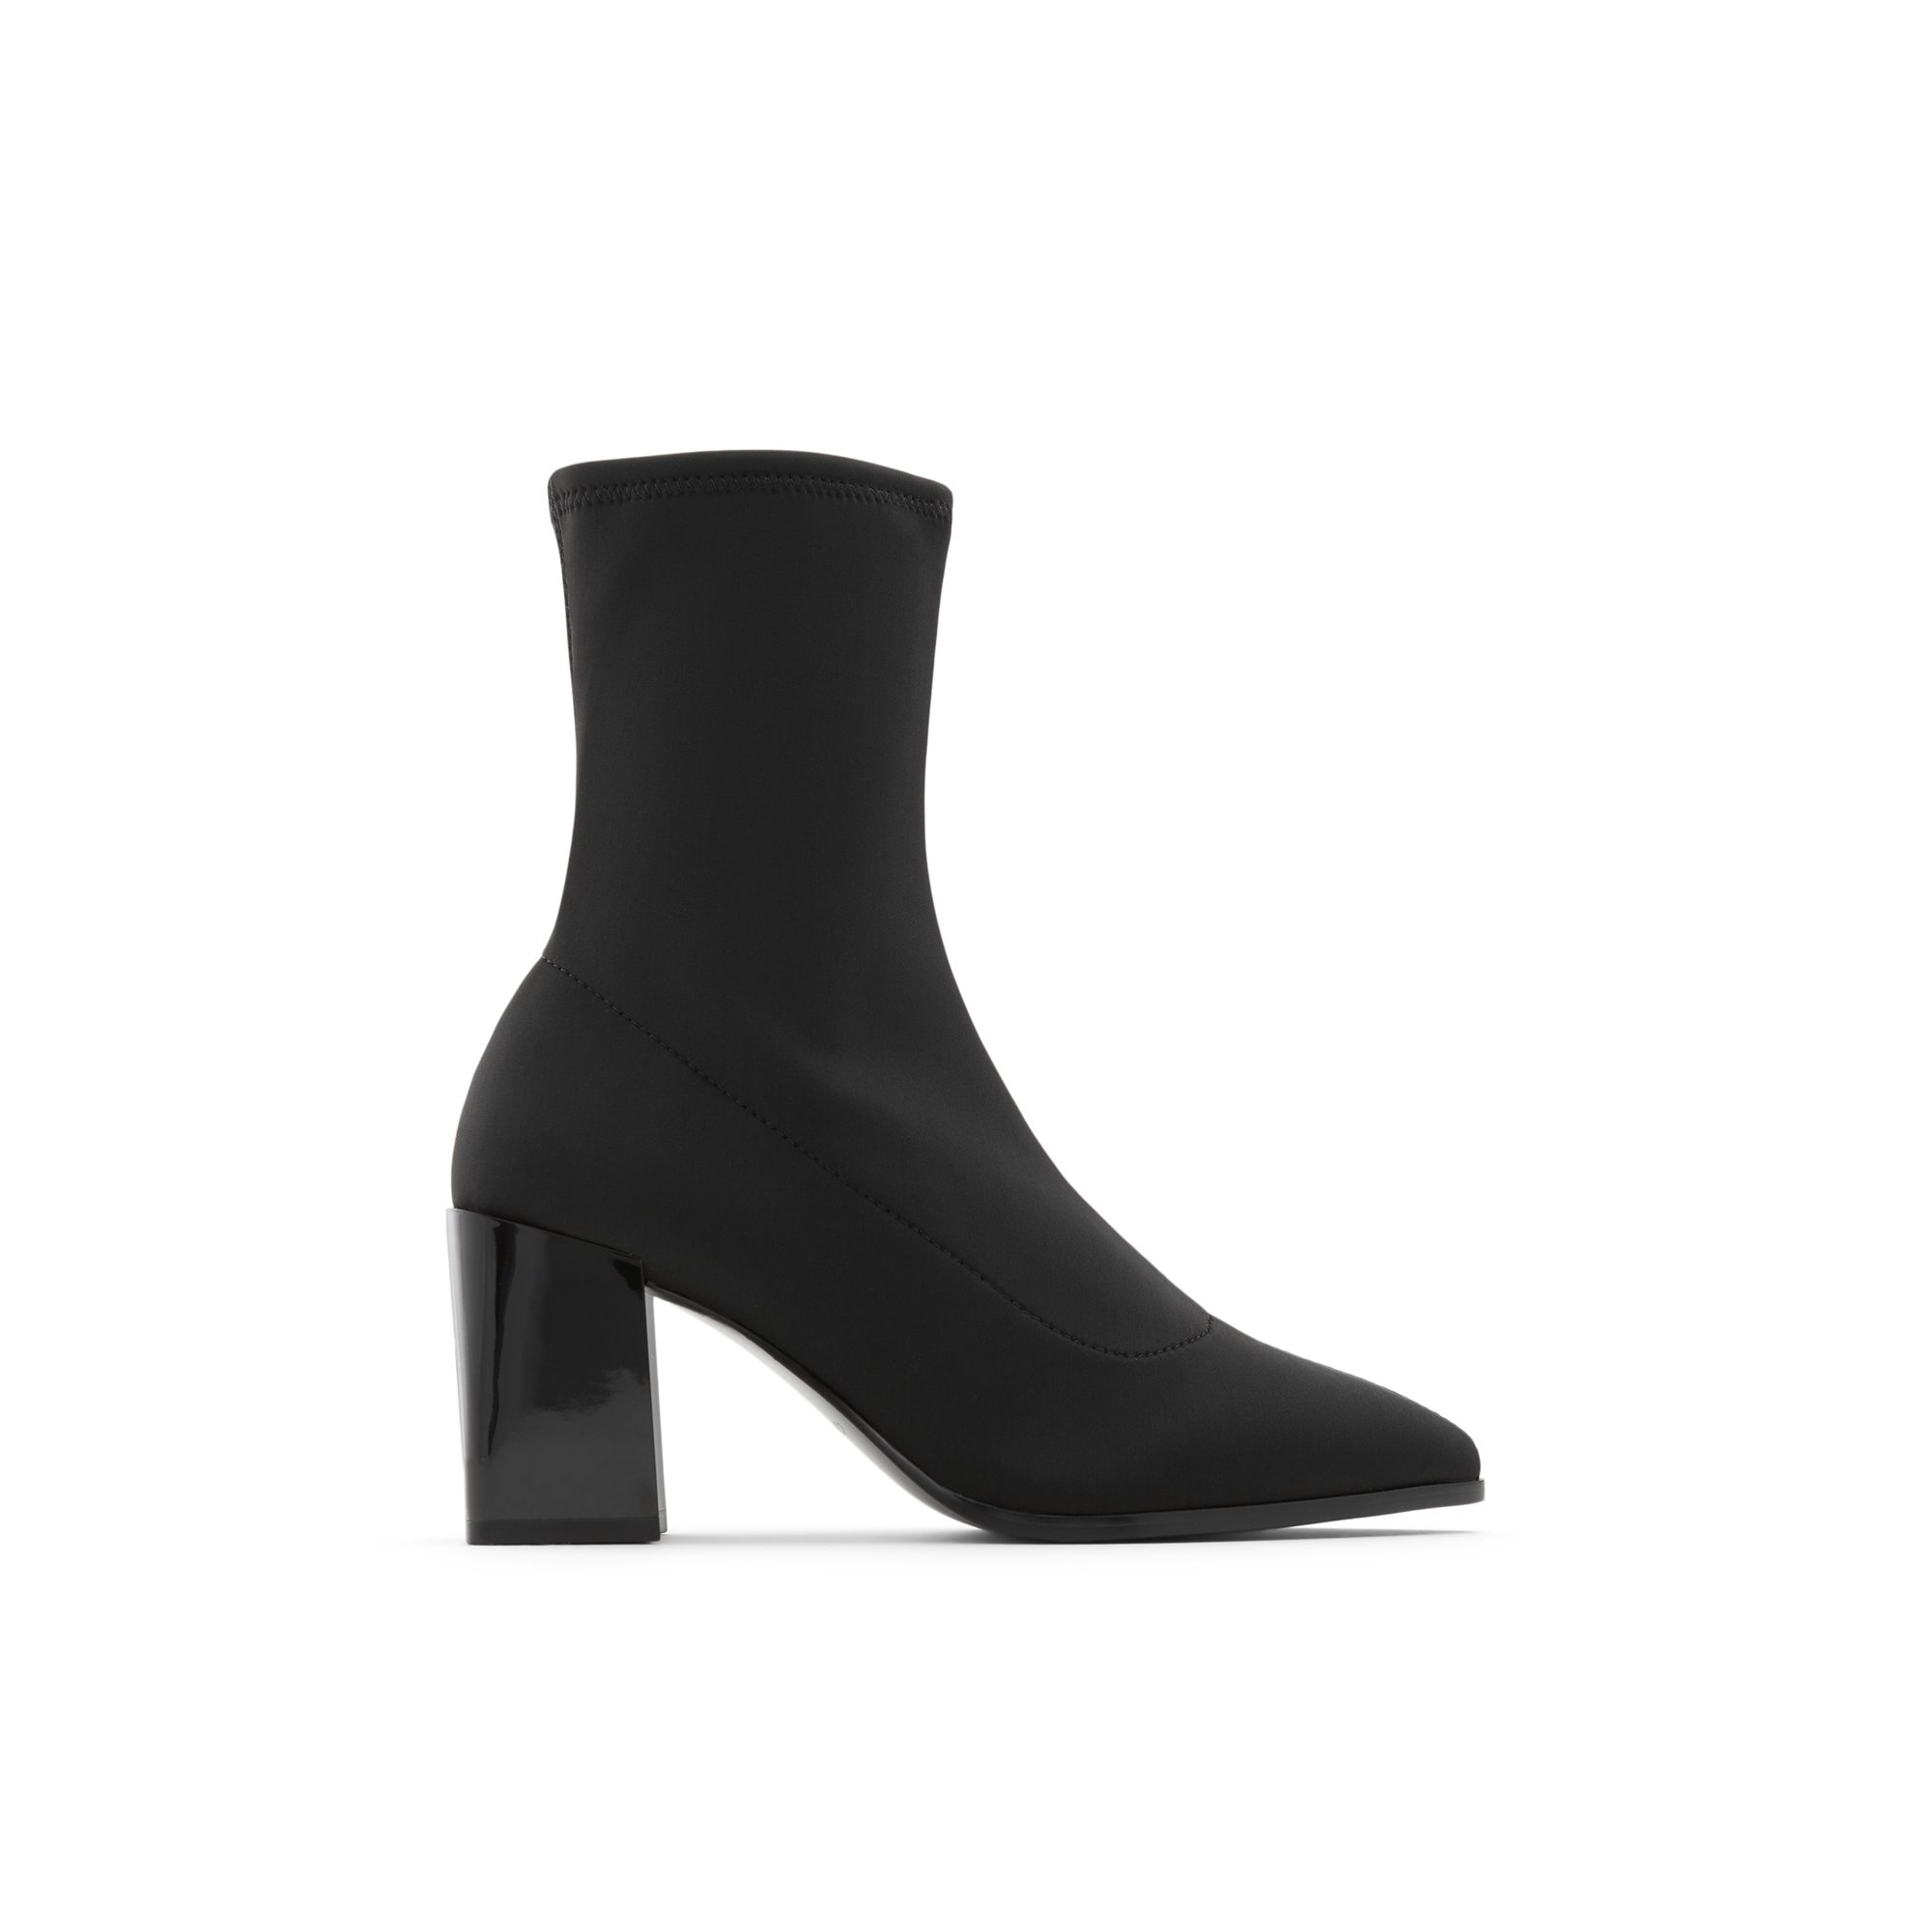 Image of ALDO Adwigocia - Women's Ankle Boot - Black, Size 6